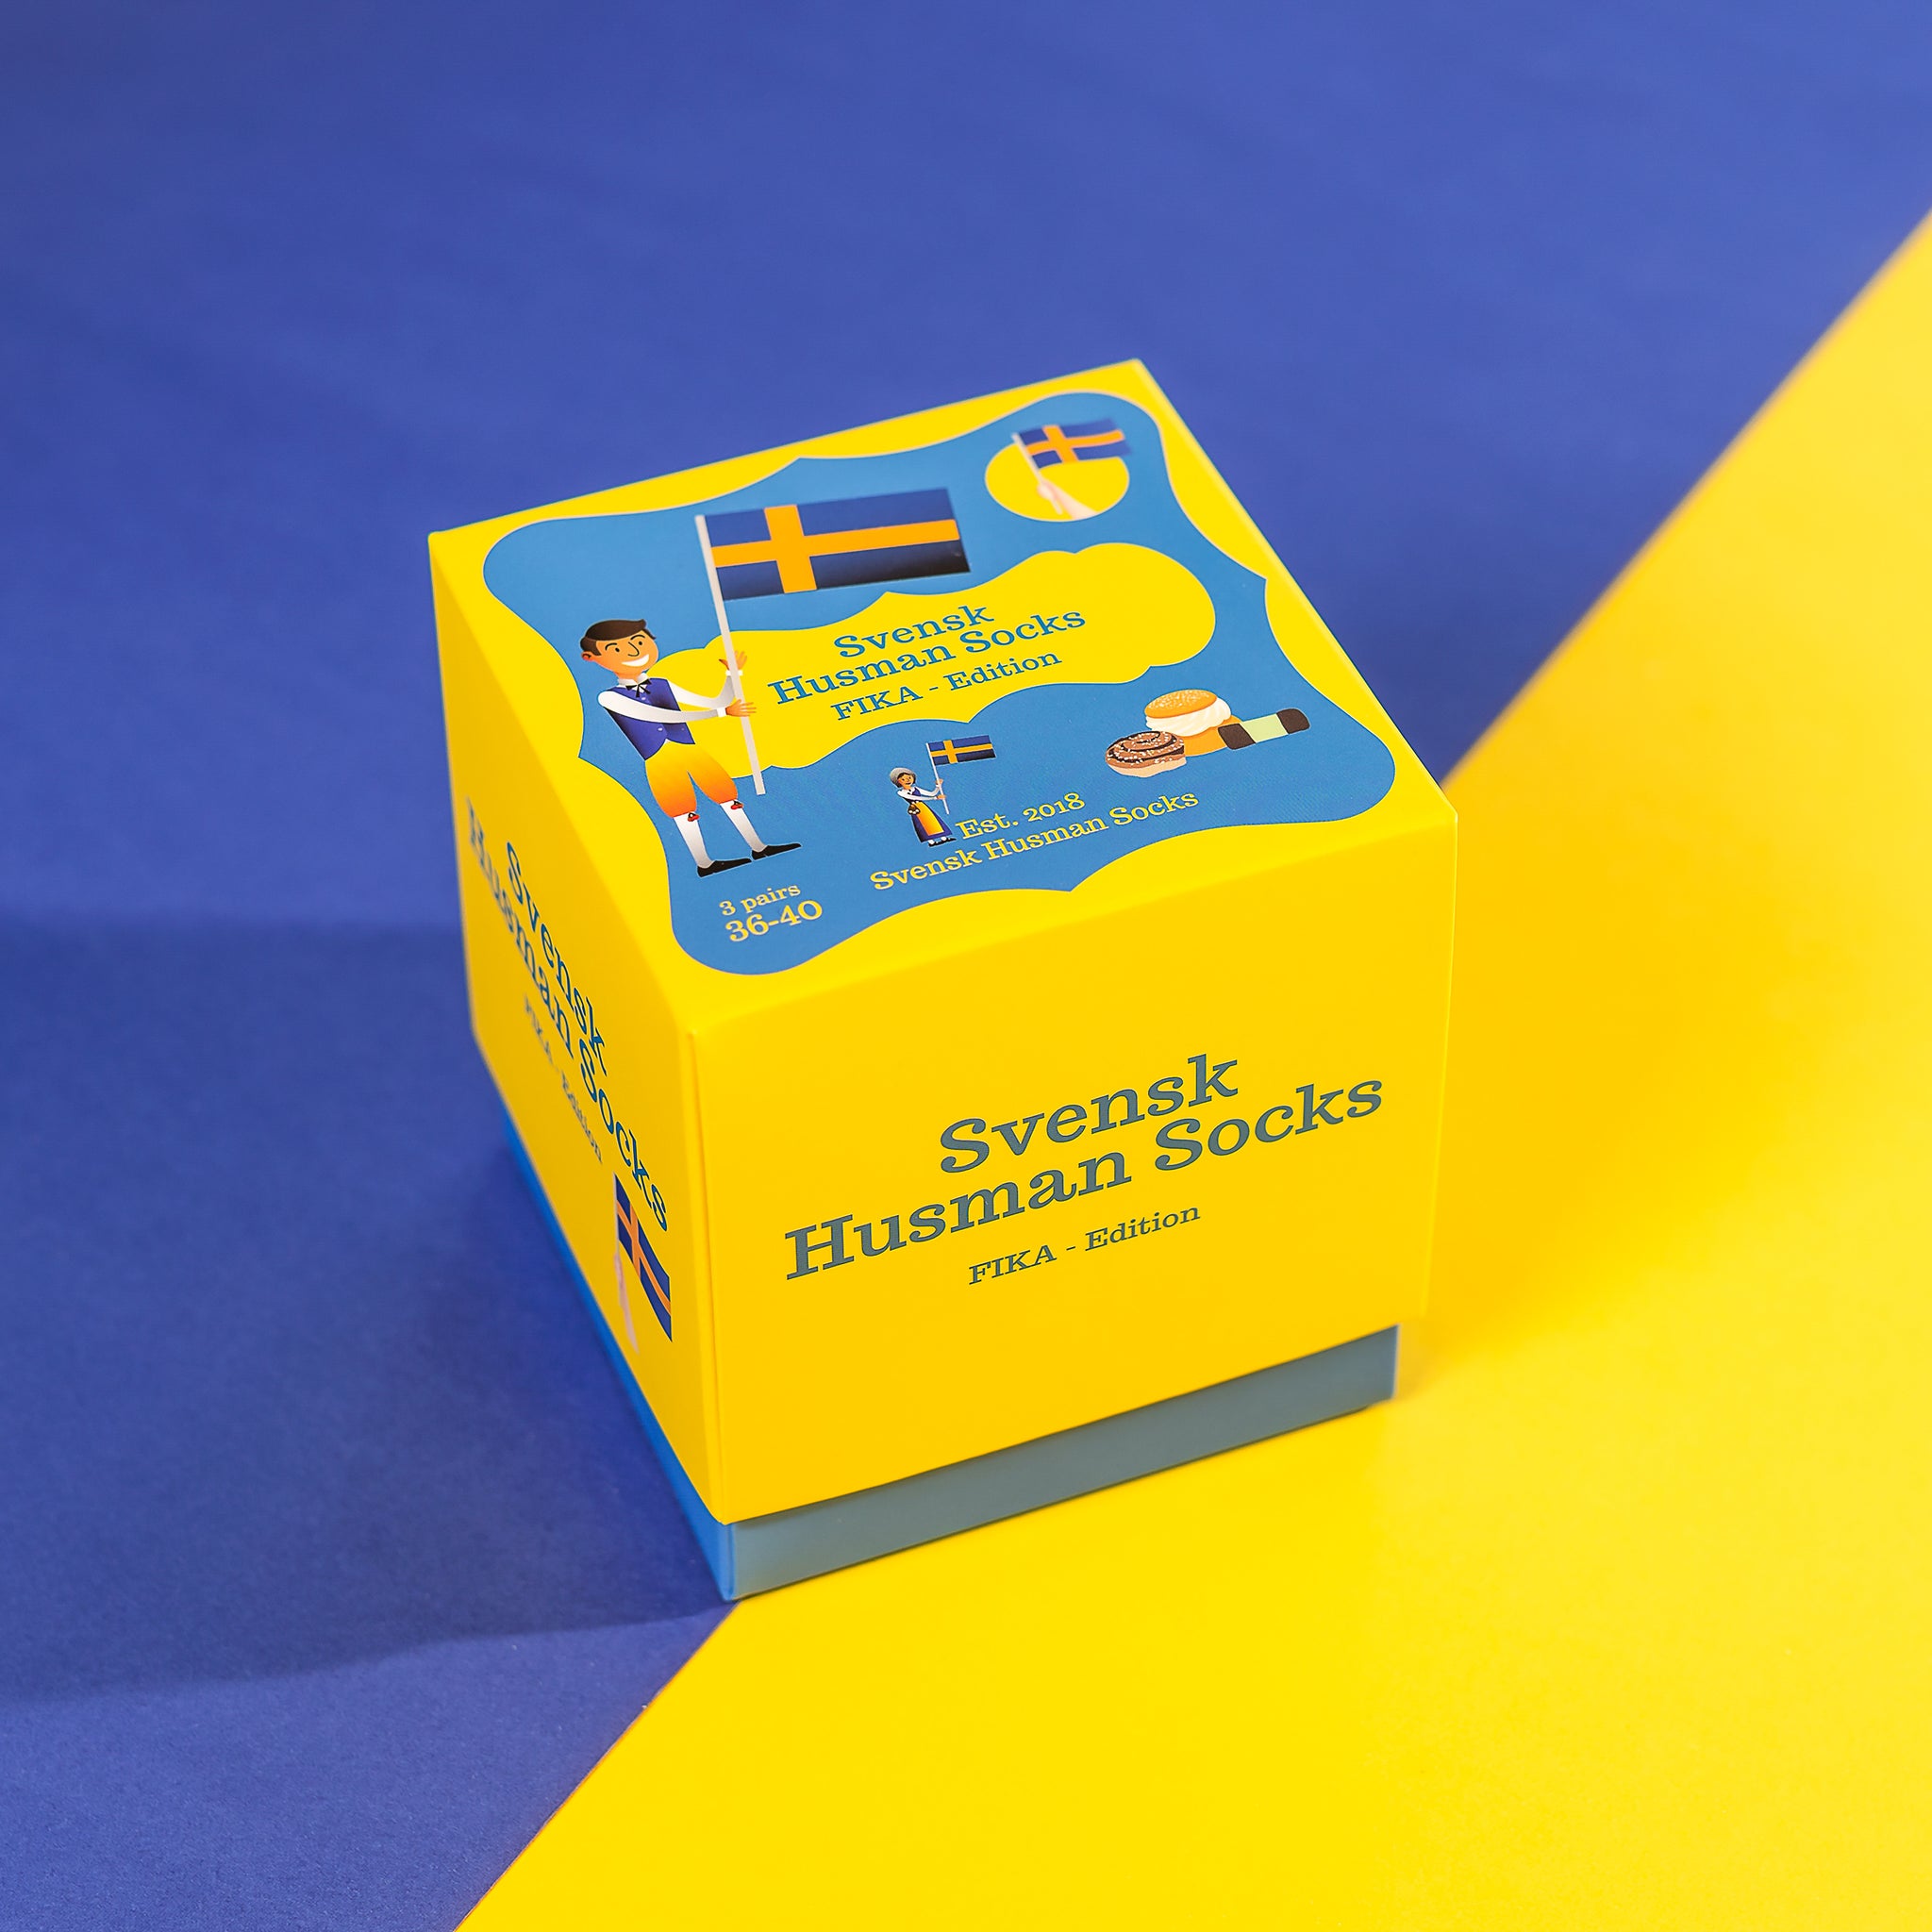 Svensk Husman Socks Fika Gift Box 3-pack